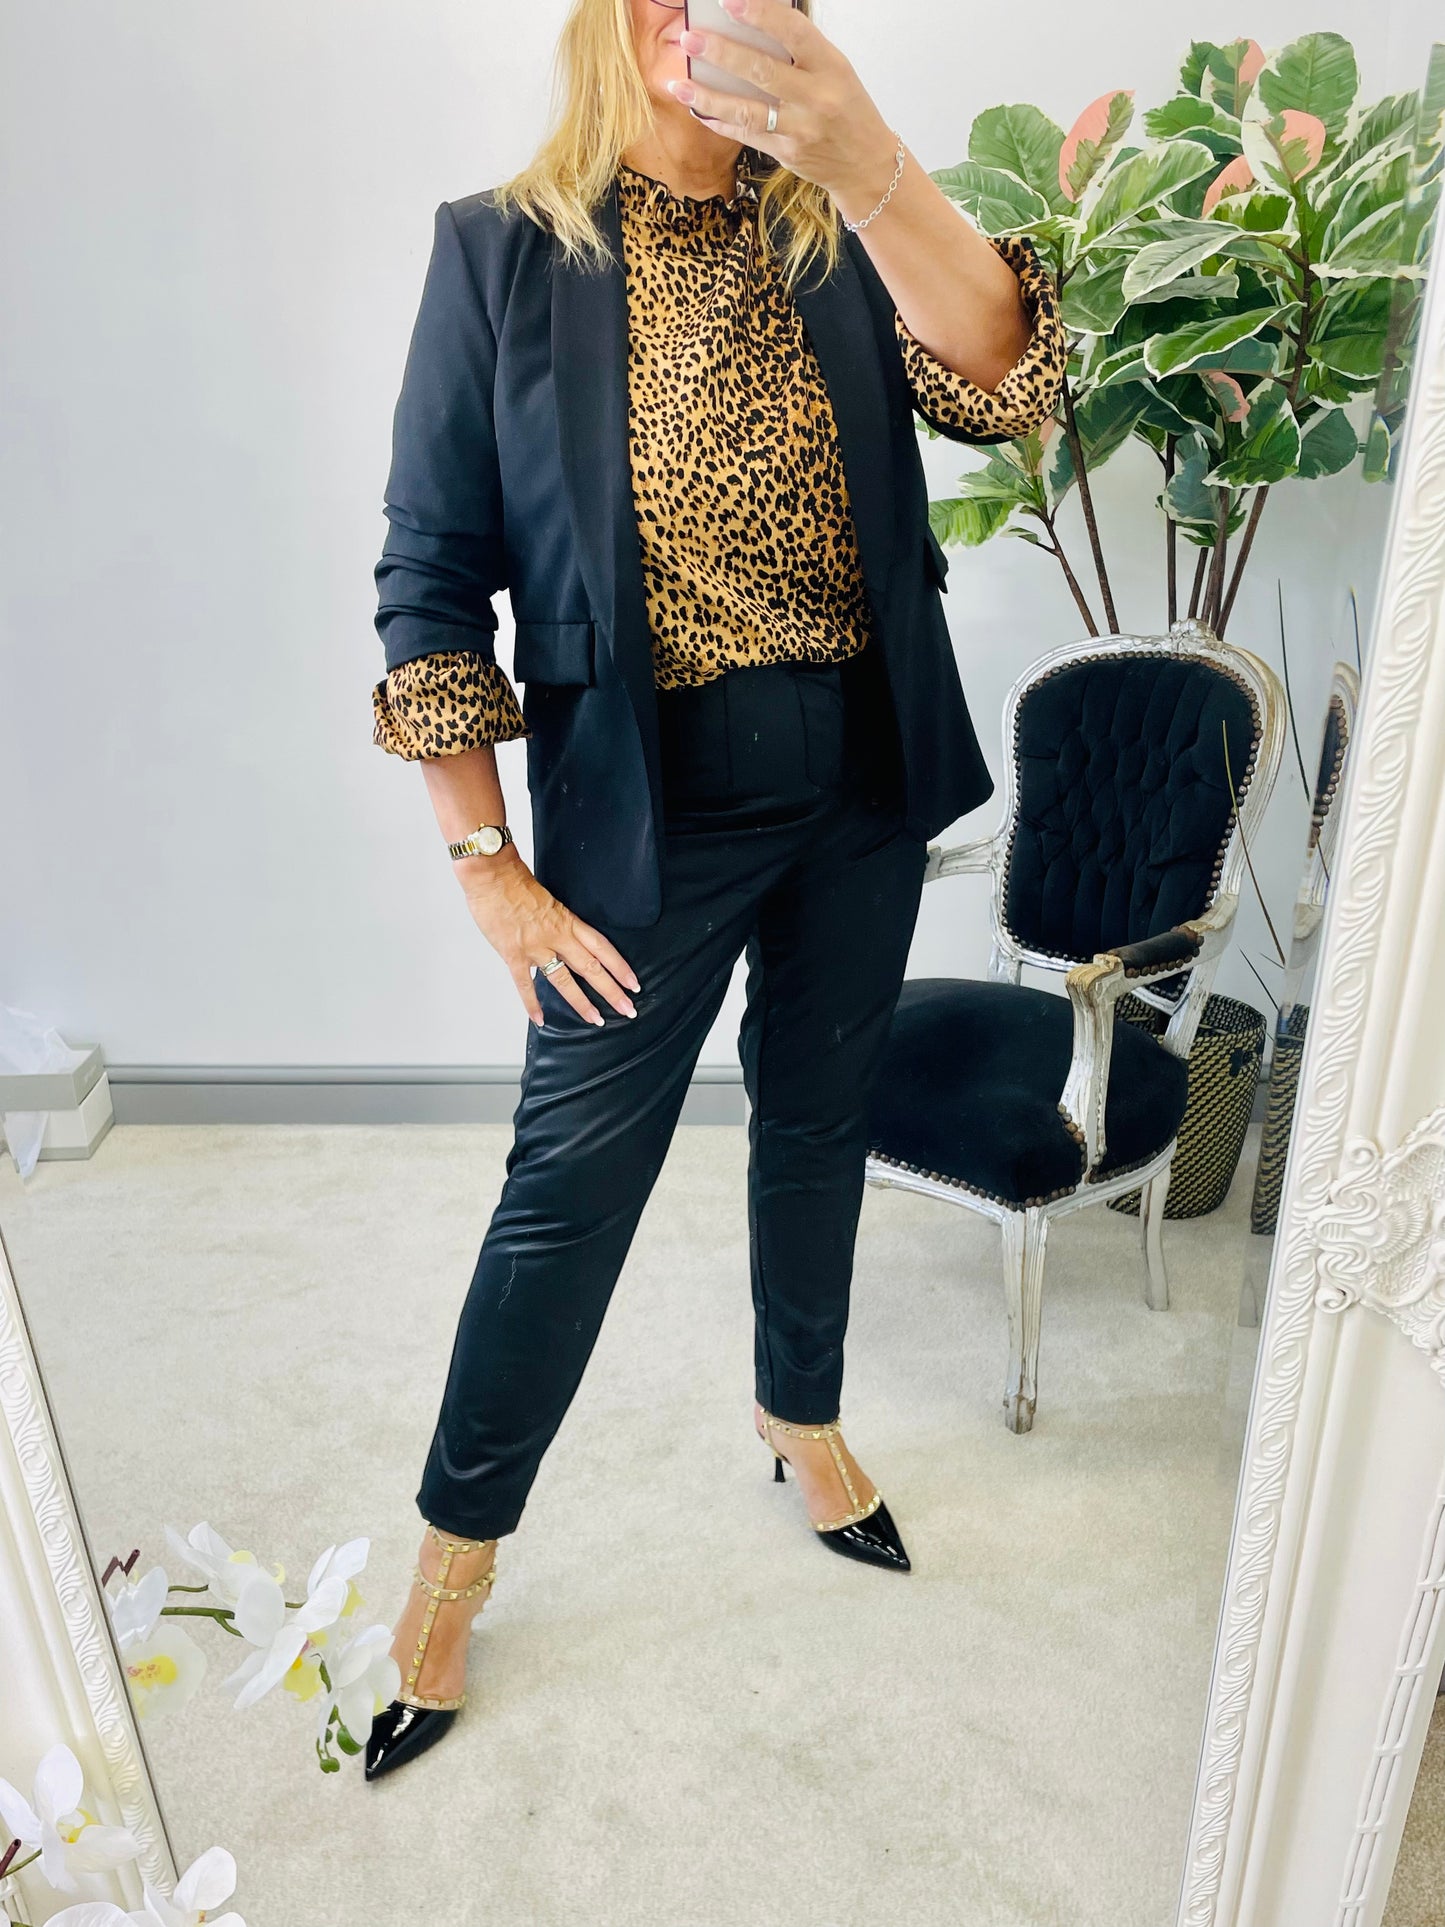 The CHLOE leopard print blouse